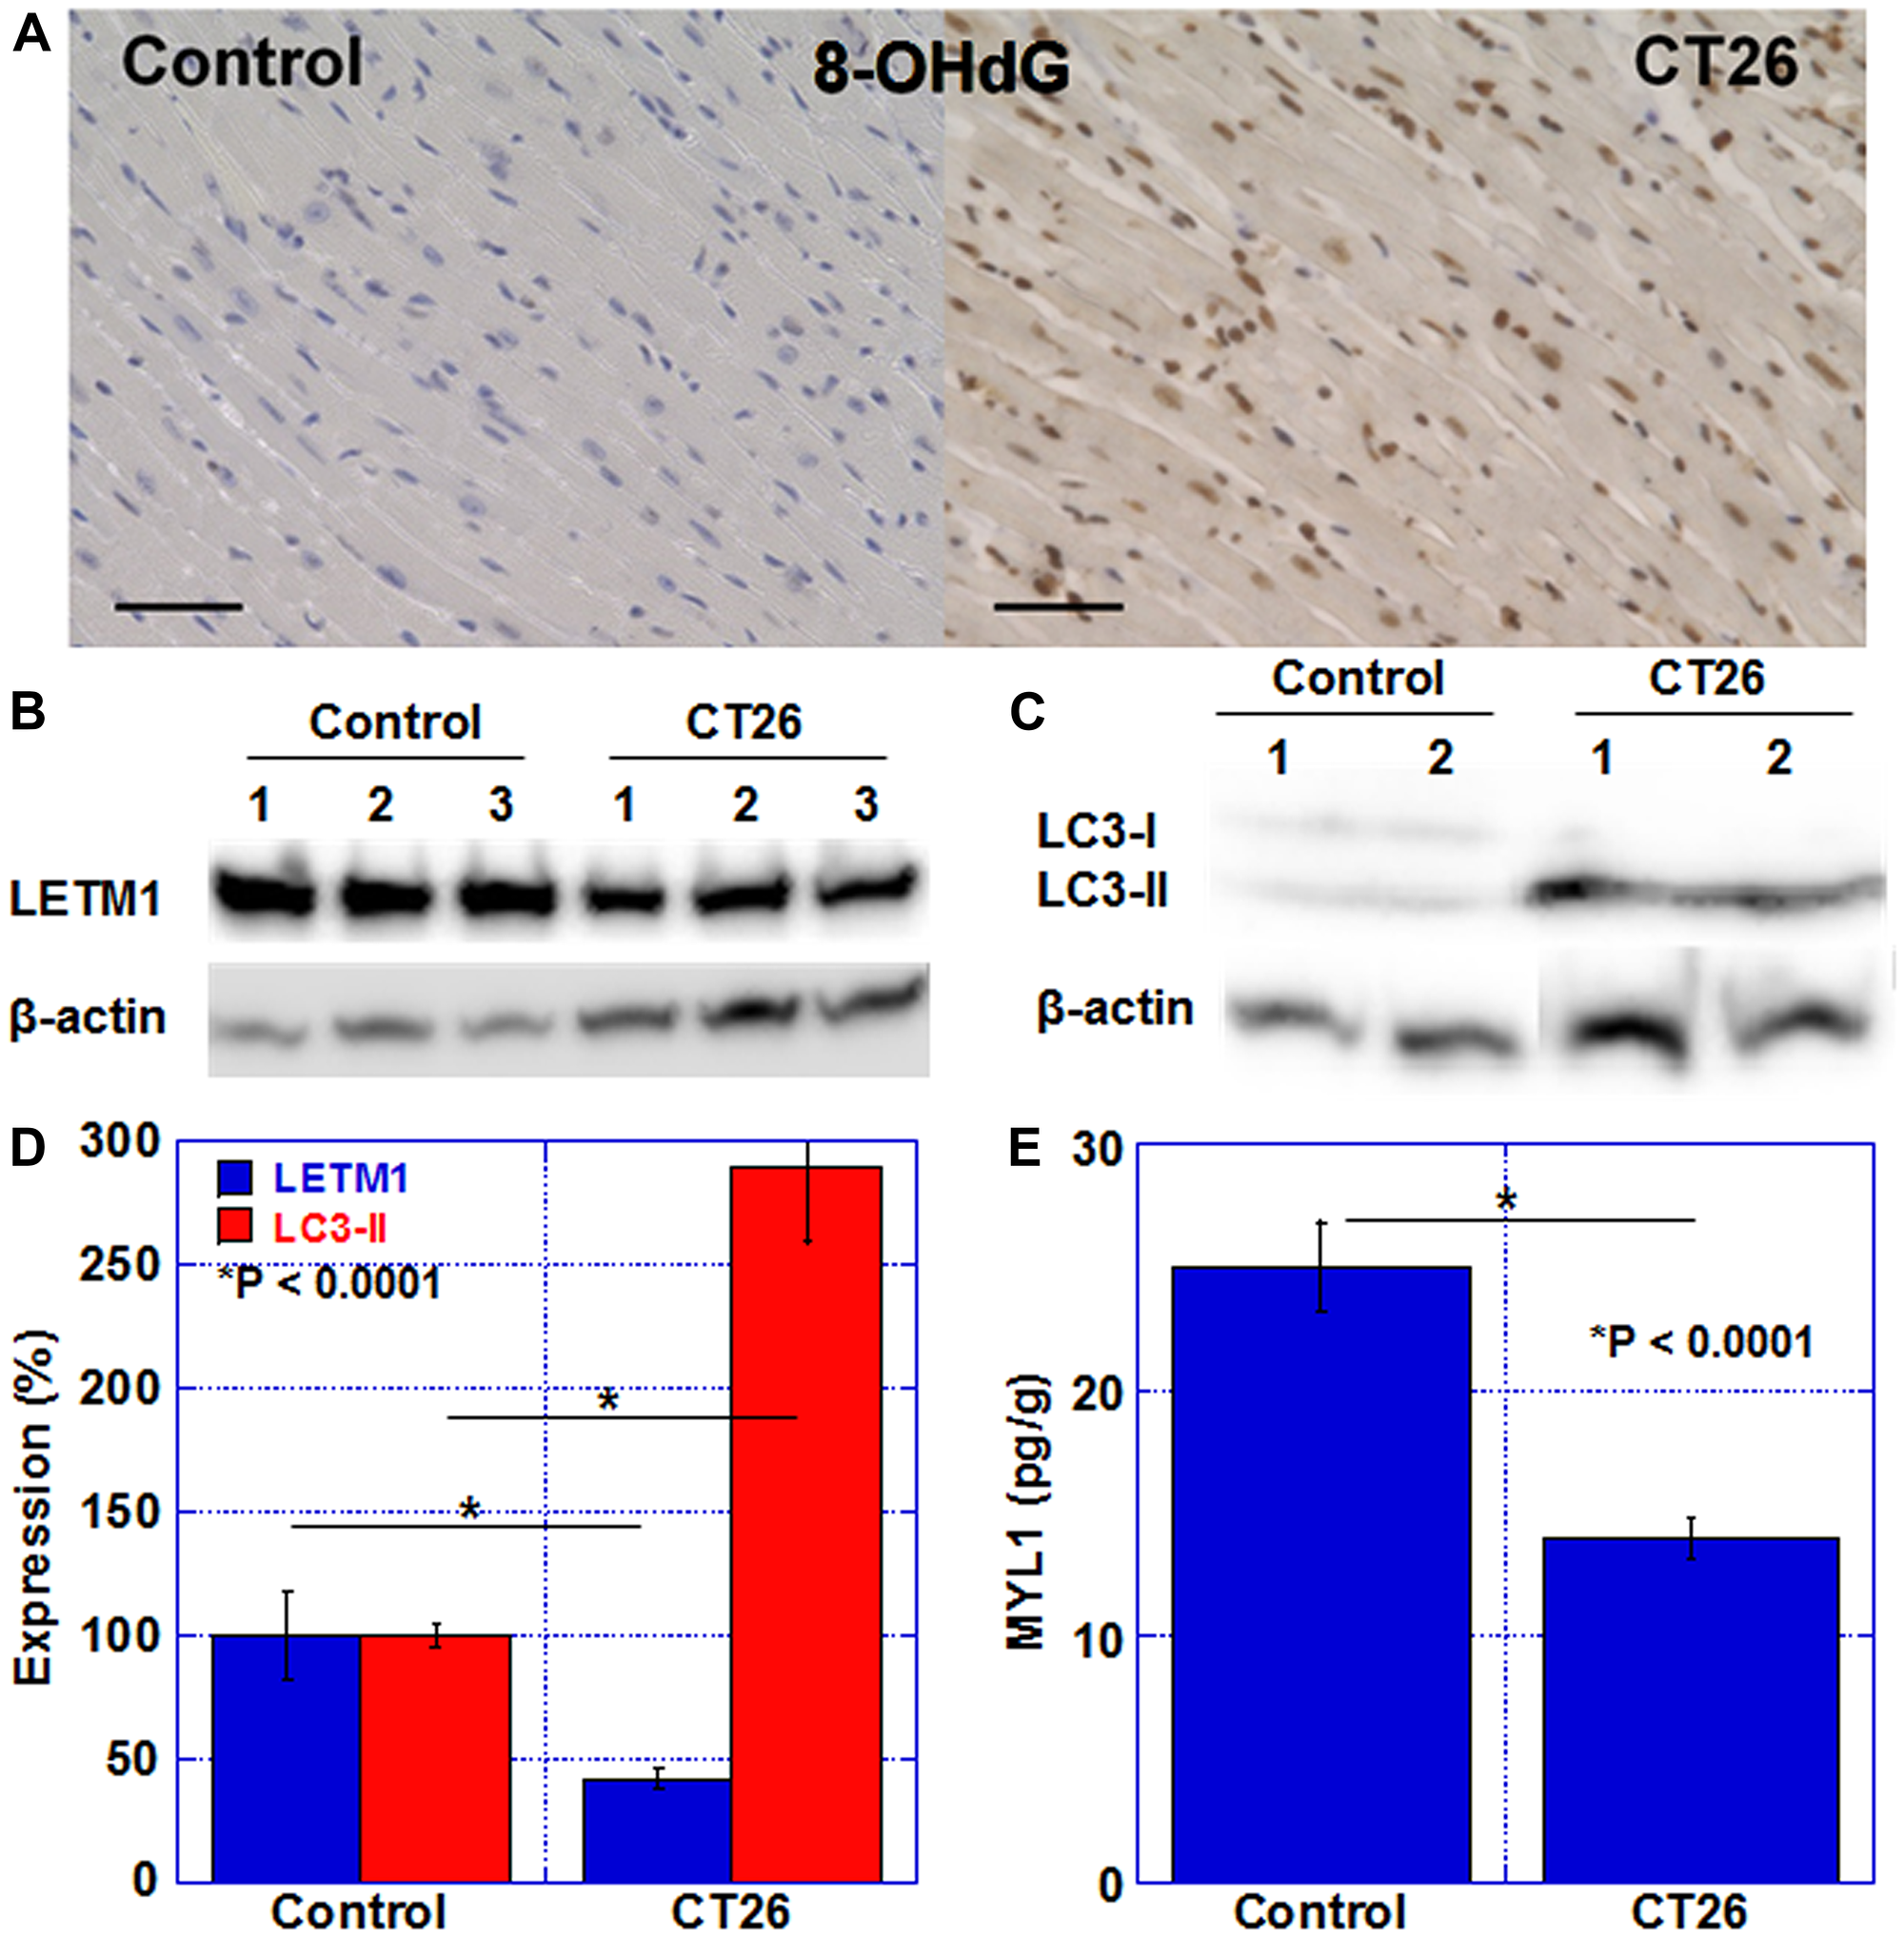 Oxidative stress, mitochondria, and autophagy in the myocardium of CT26-inoculated BALB/c mice.